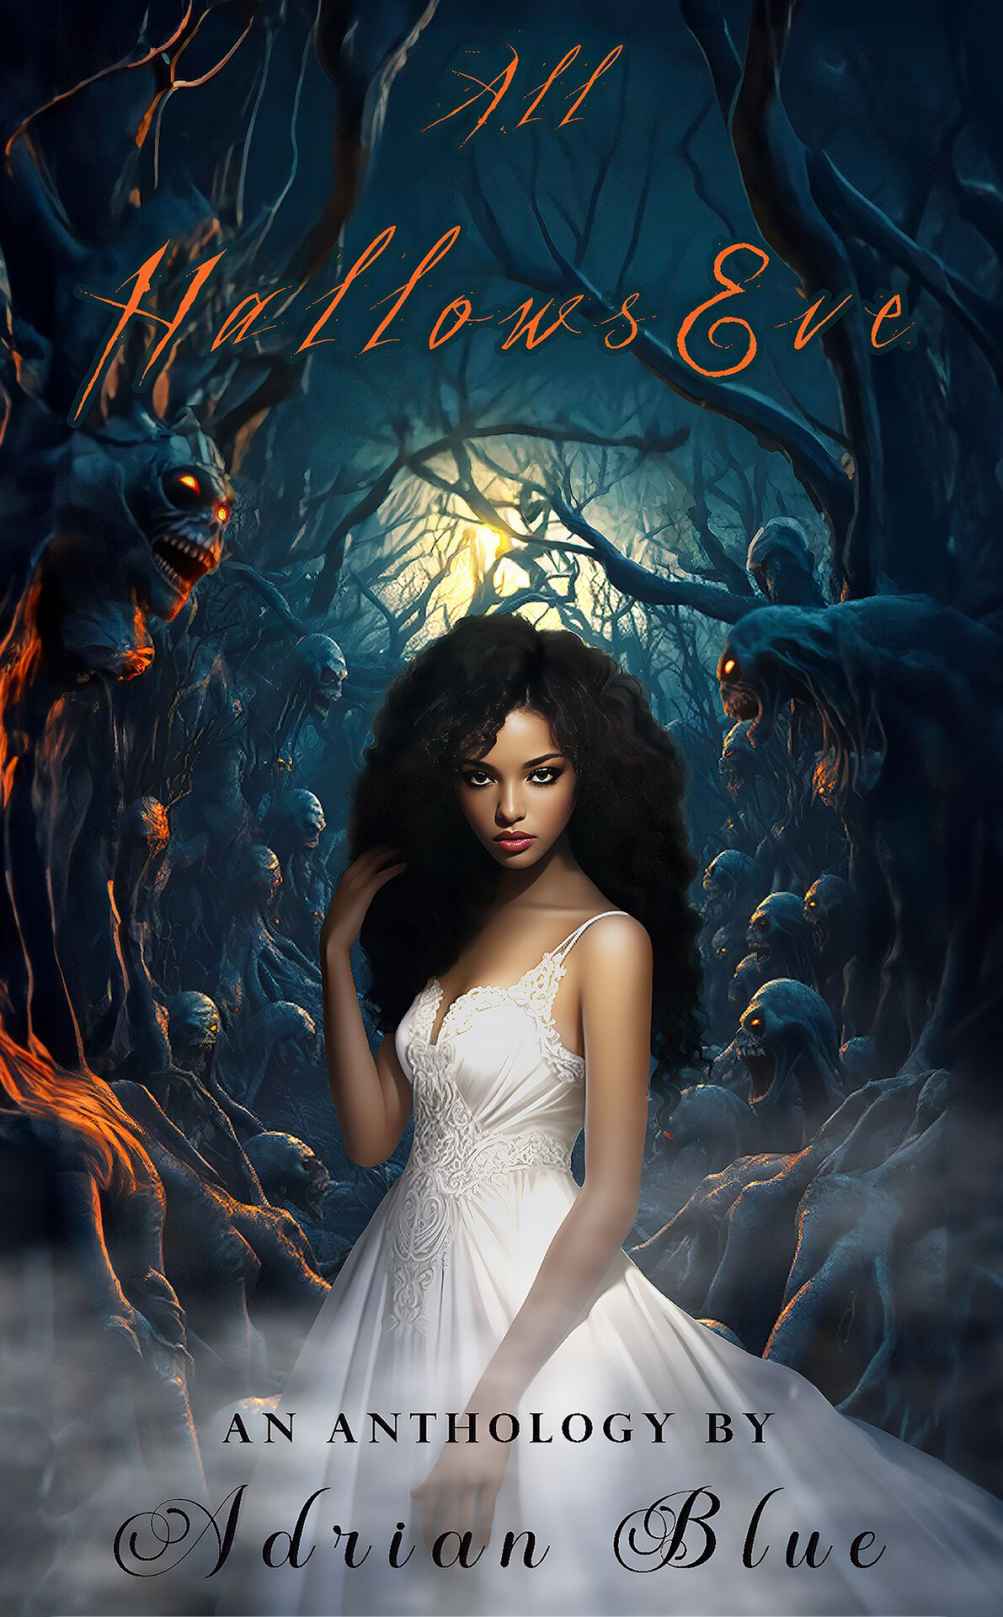 All Hallows Eve: A Monster X Human Romance Anthology